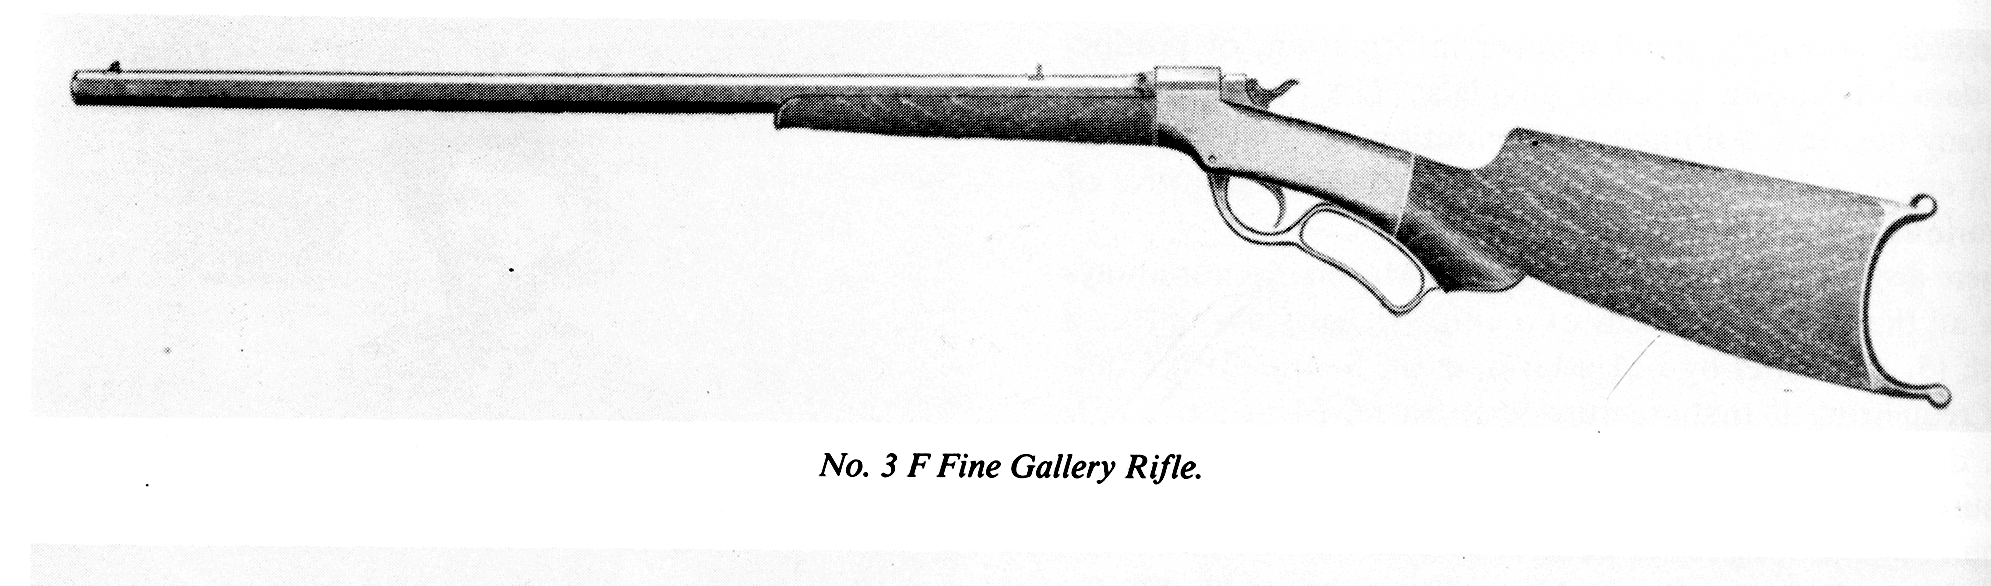 Ballard No. 3F Gallery Rifle